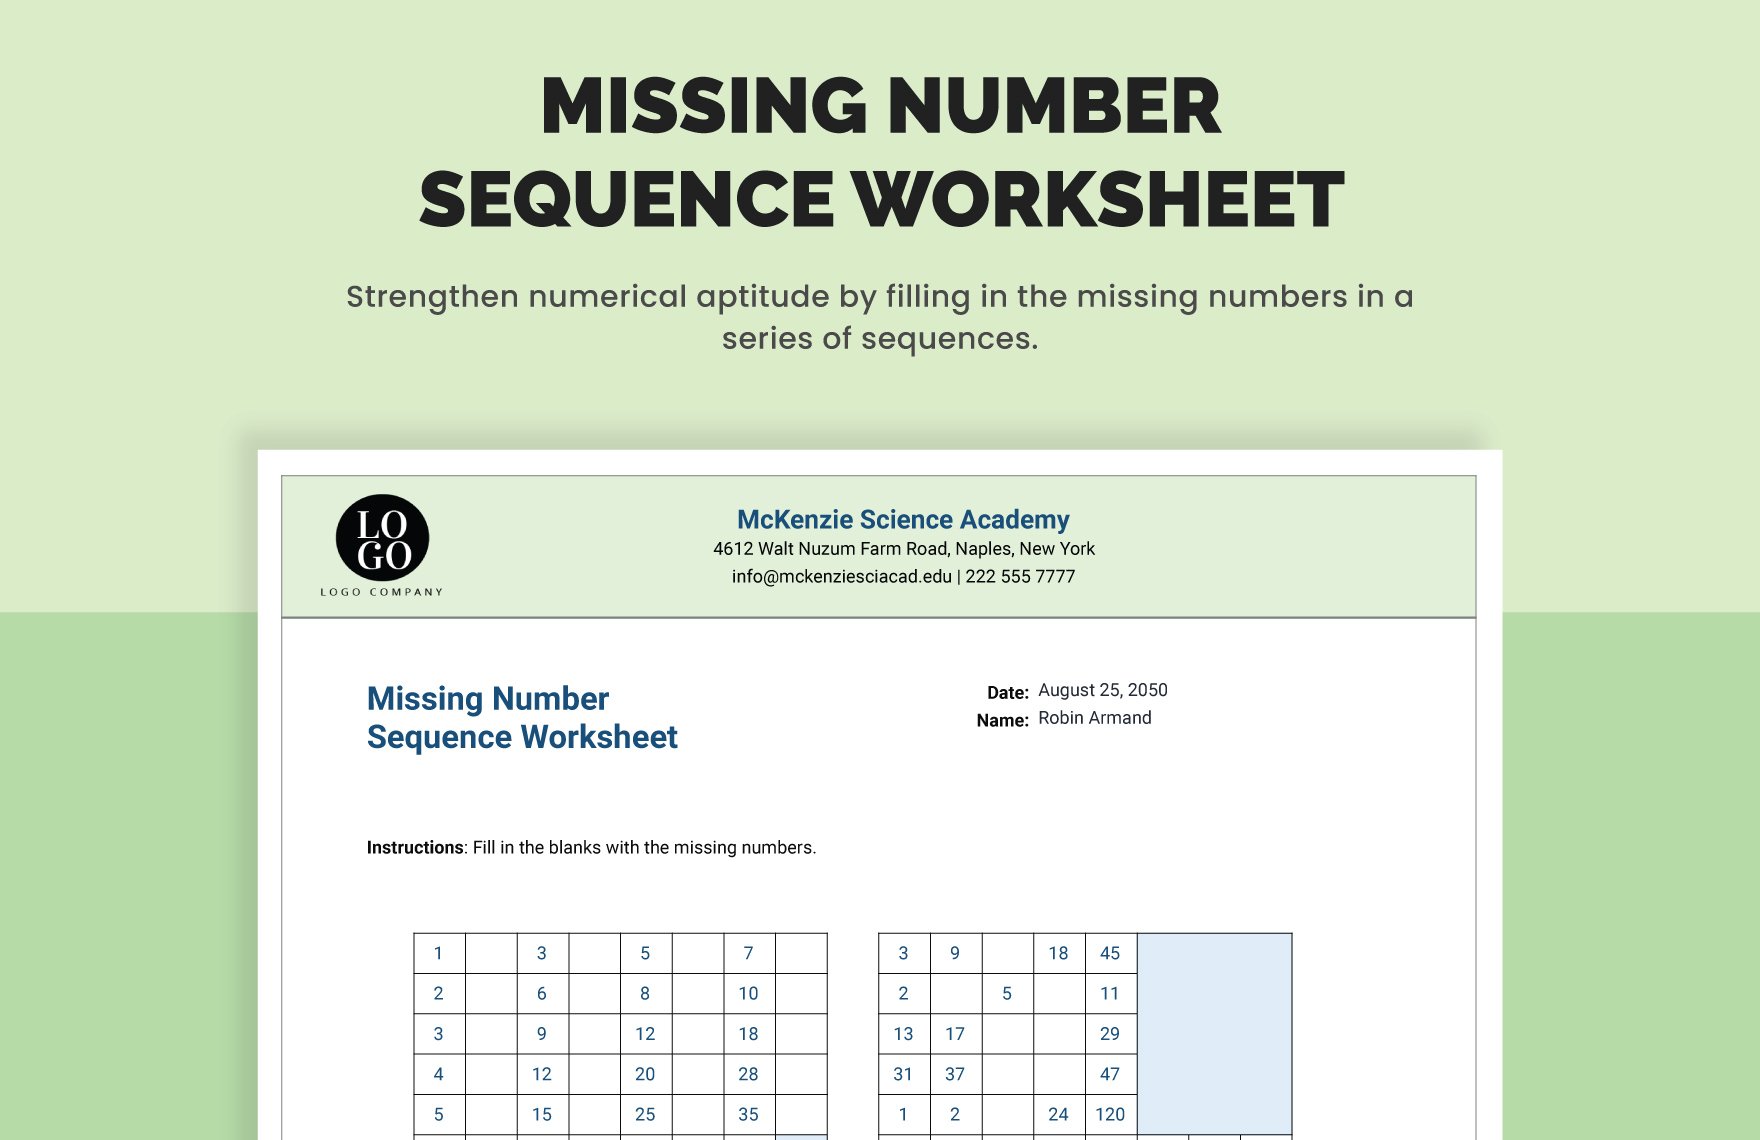 Missing Number Sequence Worksheet in Excel, Google Sheets